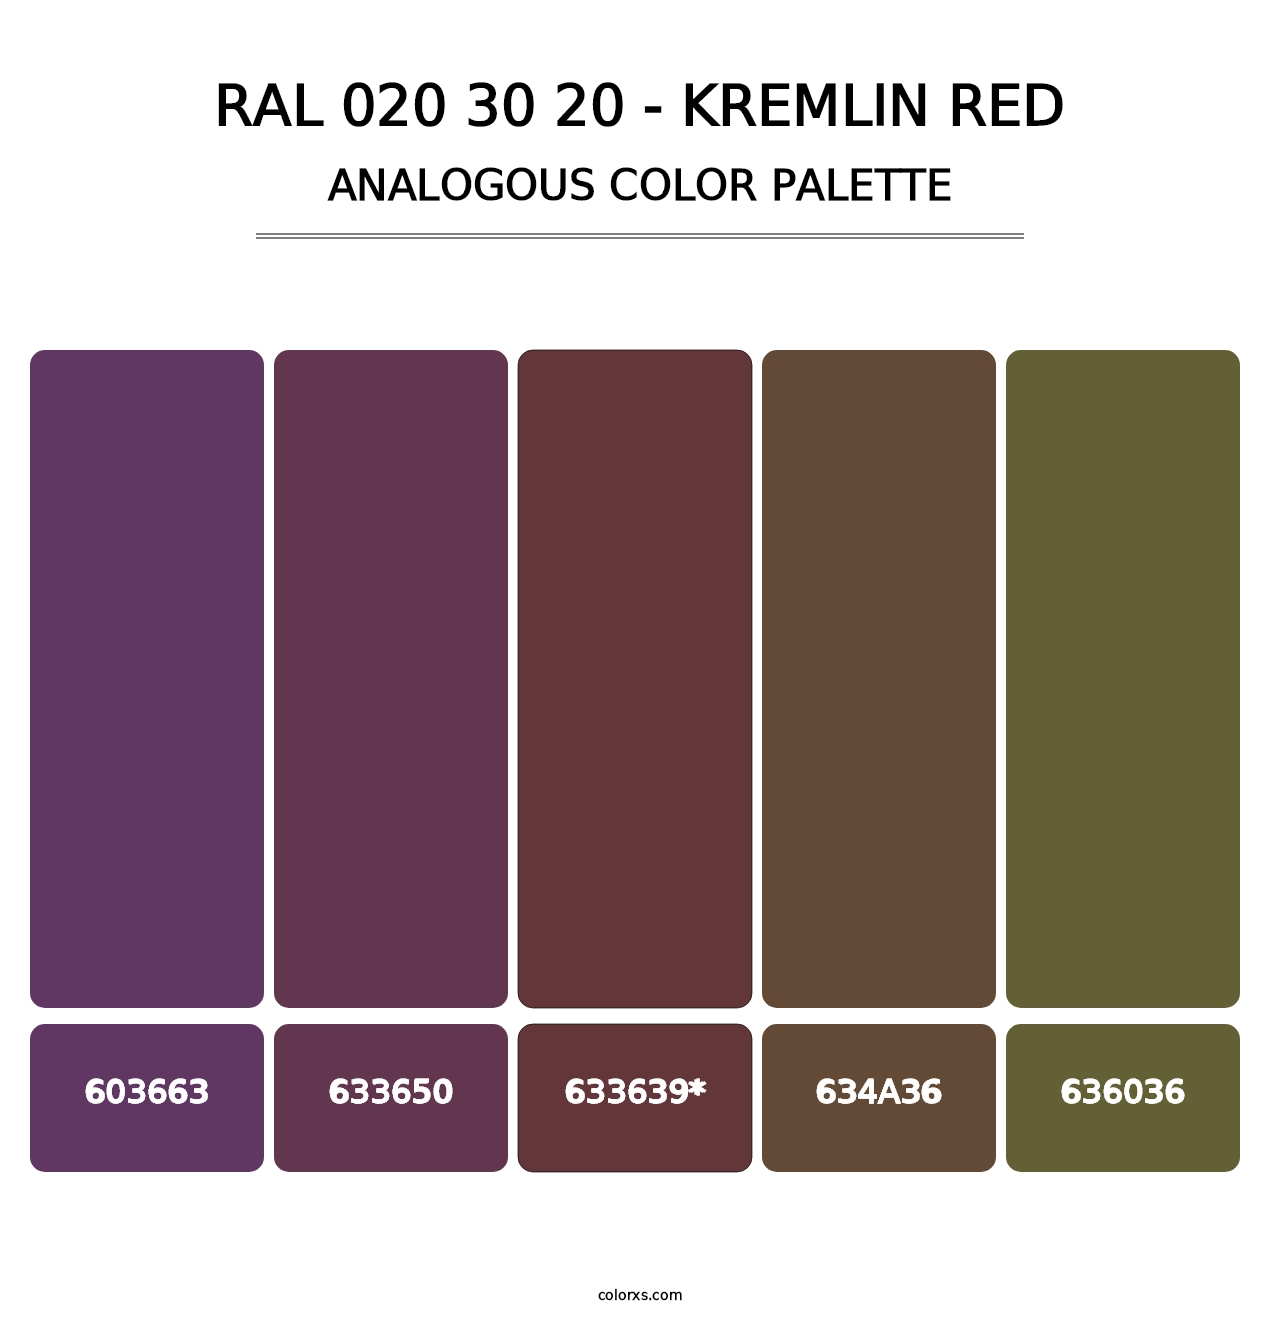 RAL 020 30 20 - Kremlin Red - Analogous Color Palette